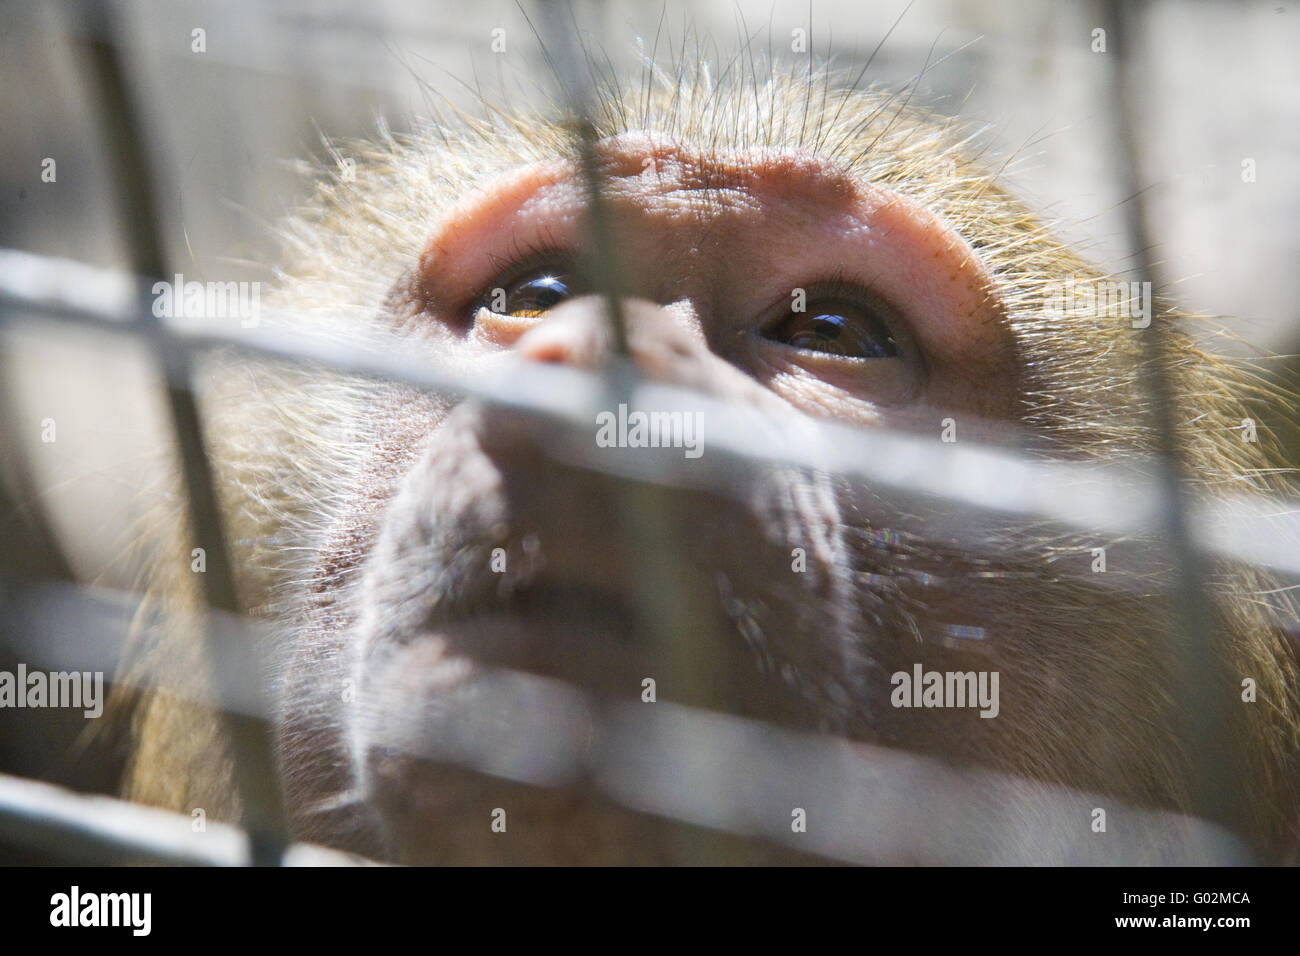 monkey in a zoo Stock Photo